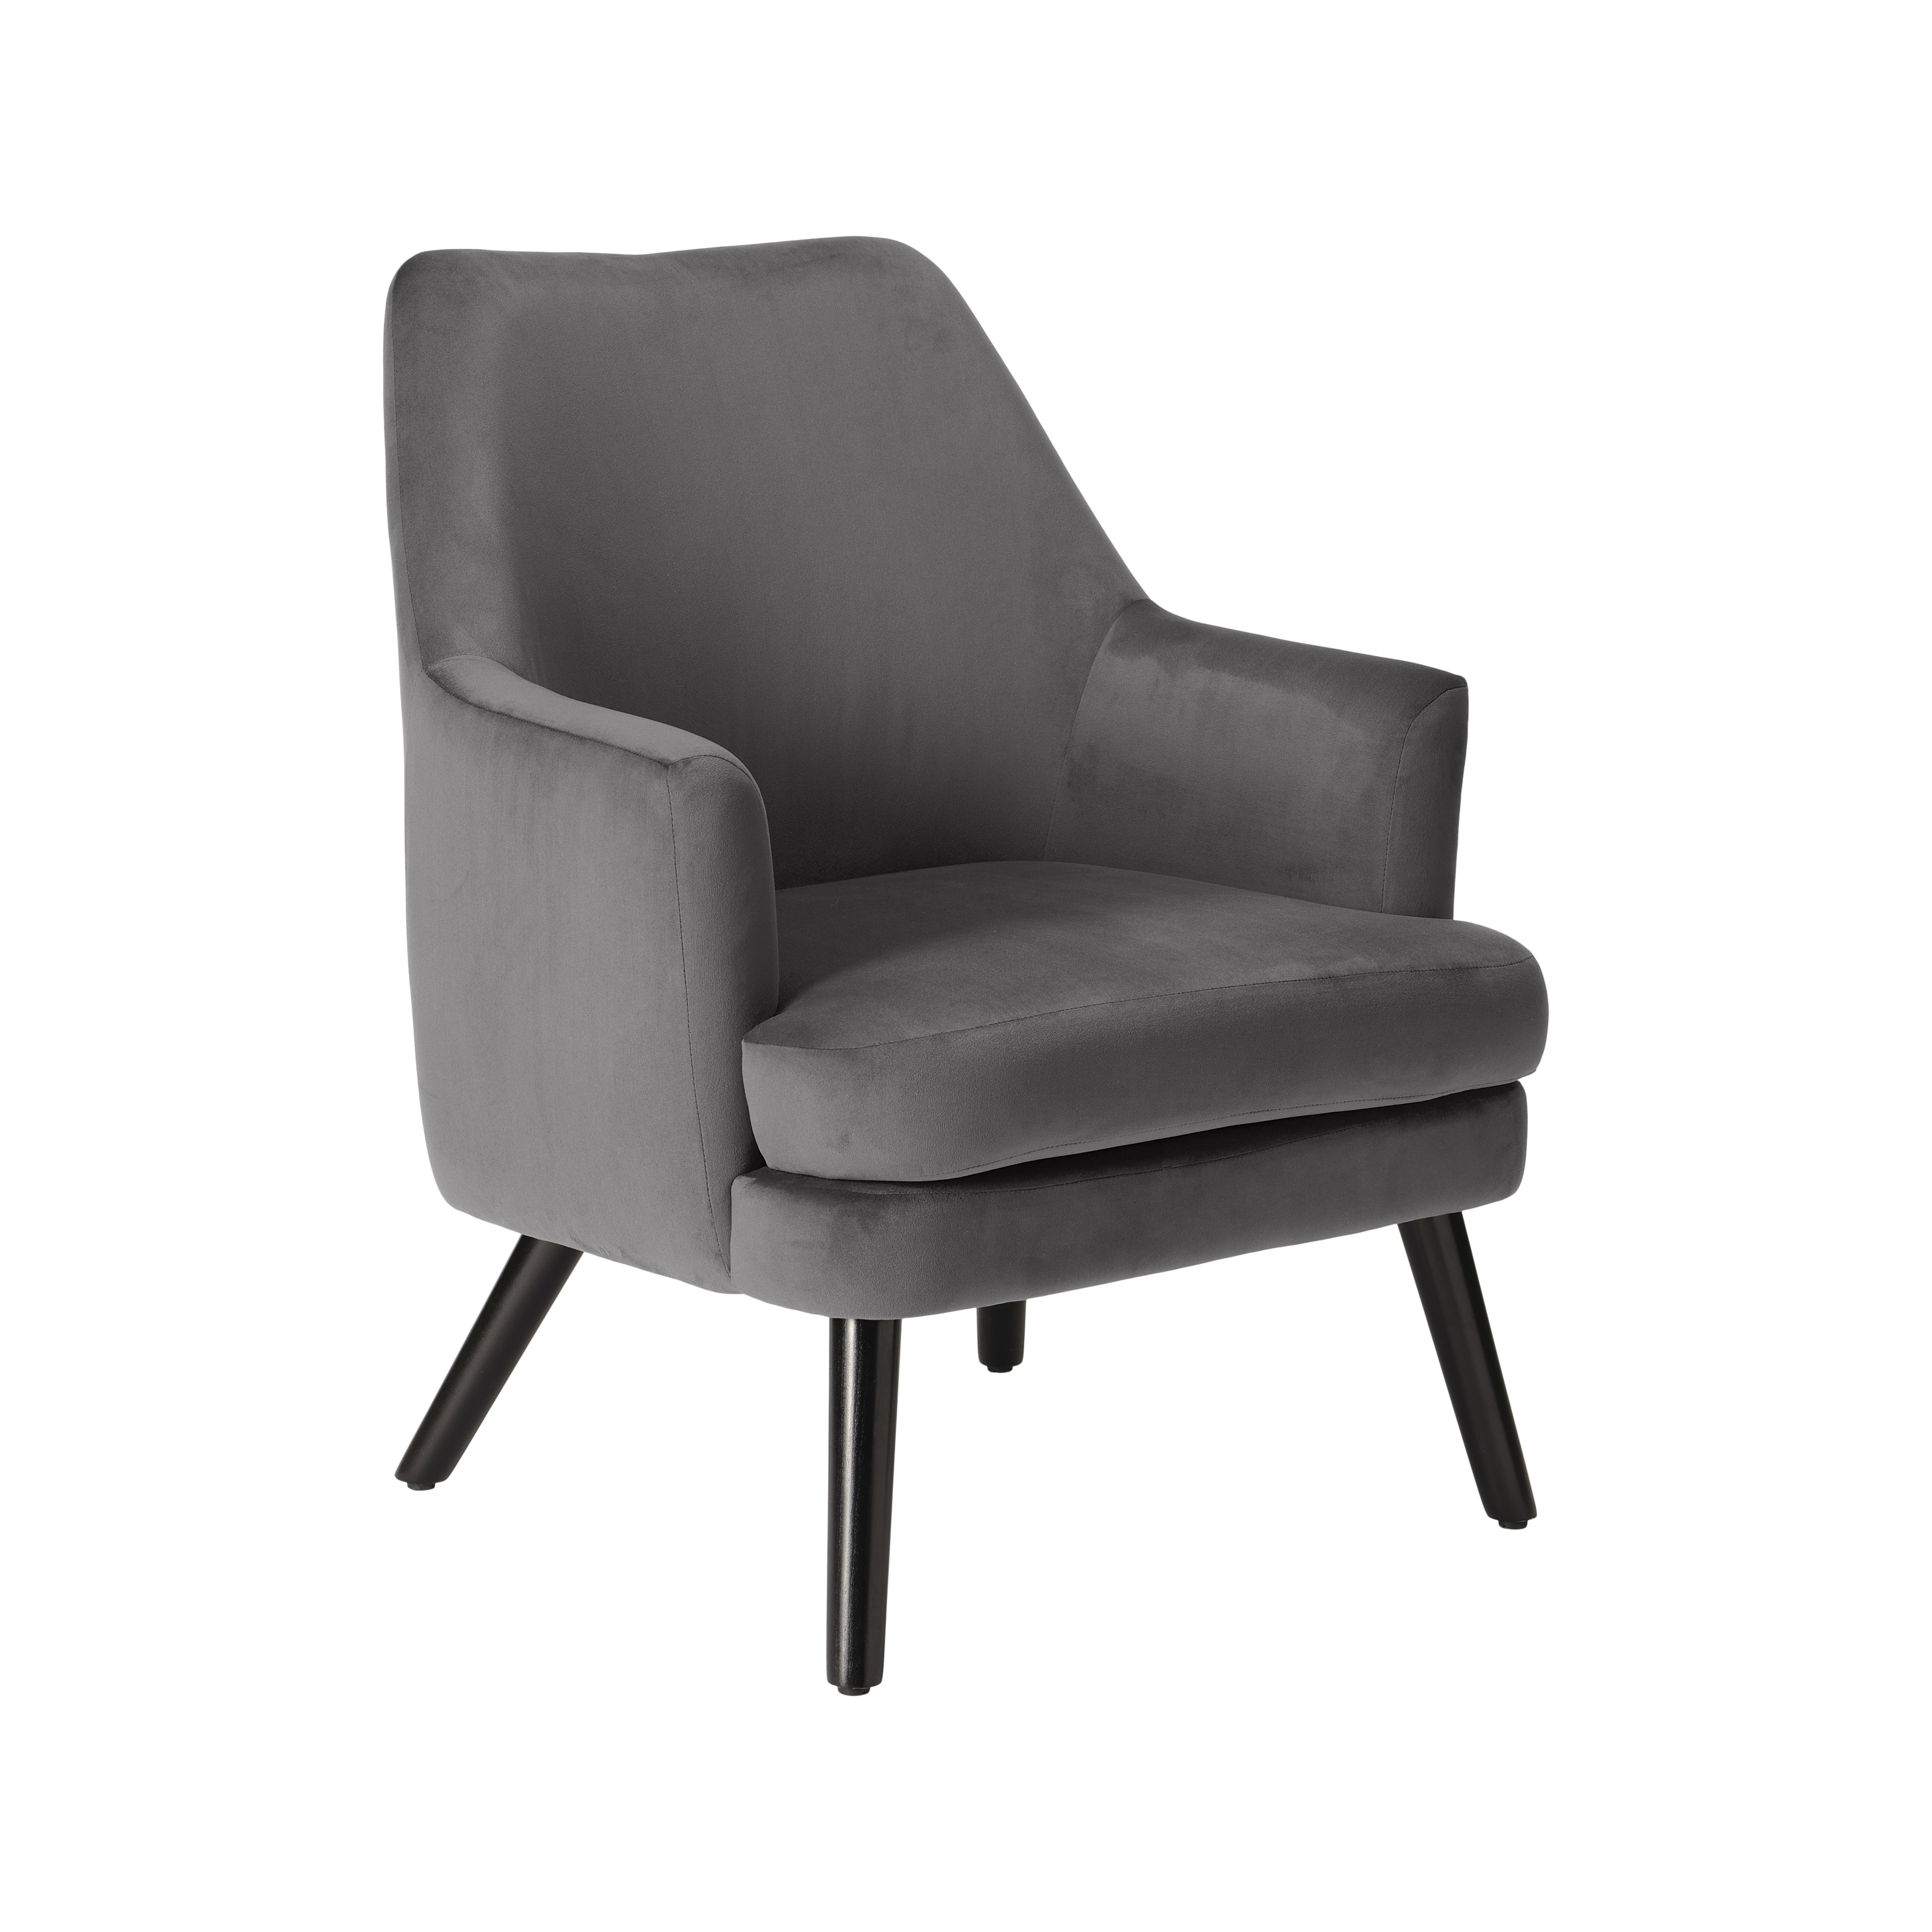 Kenver Dark grey Velvet effect Relaxer chair (H)895mm (W)720mm (D)735mm